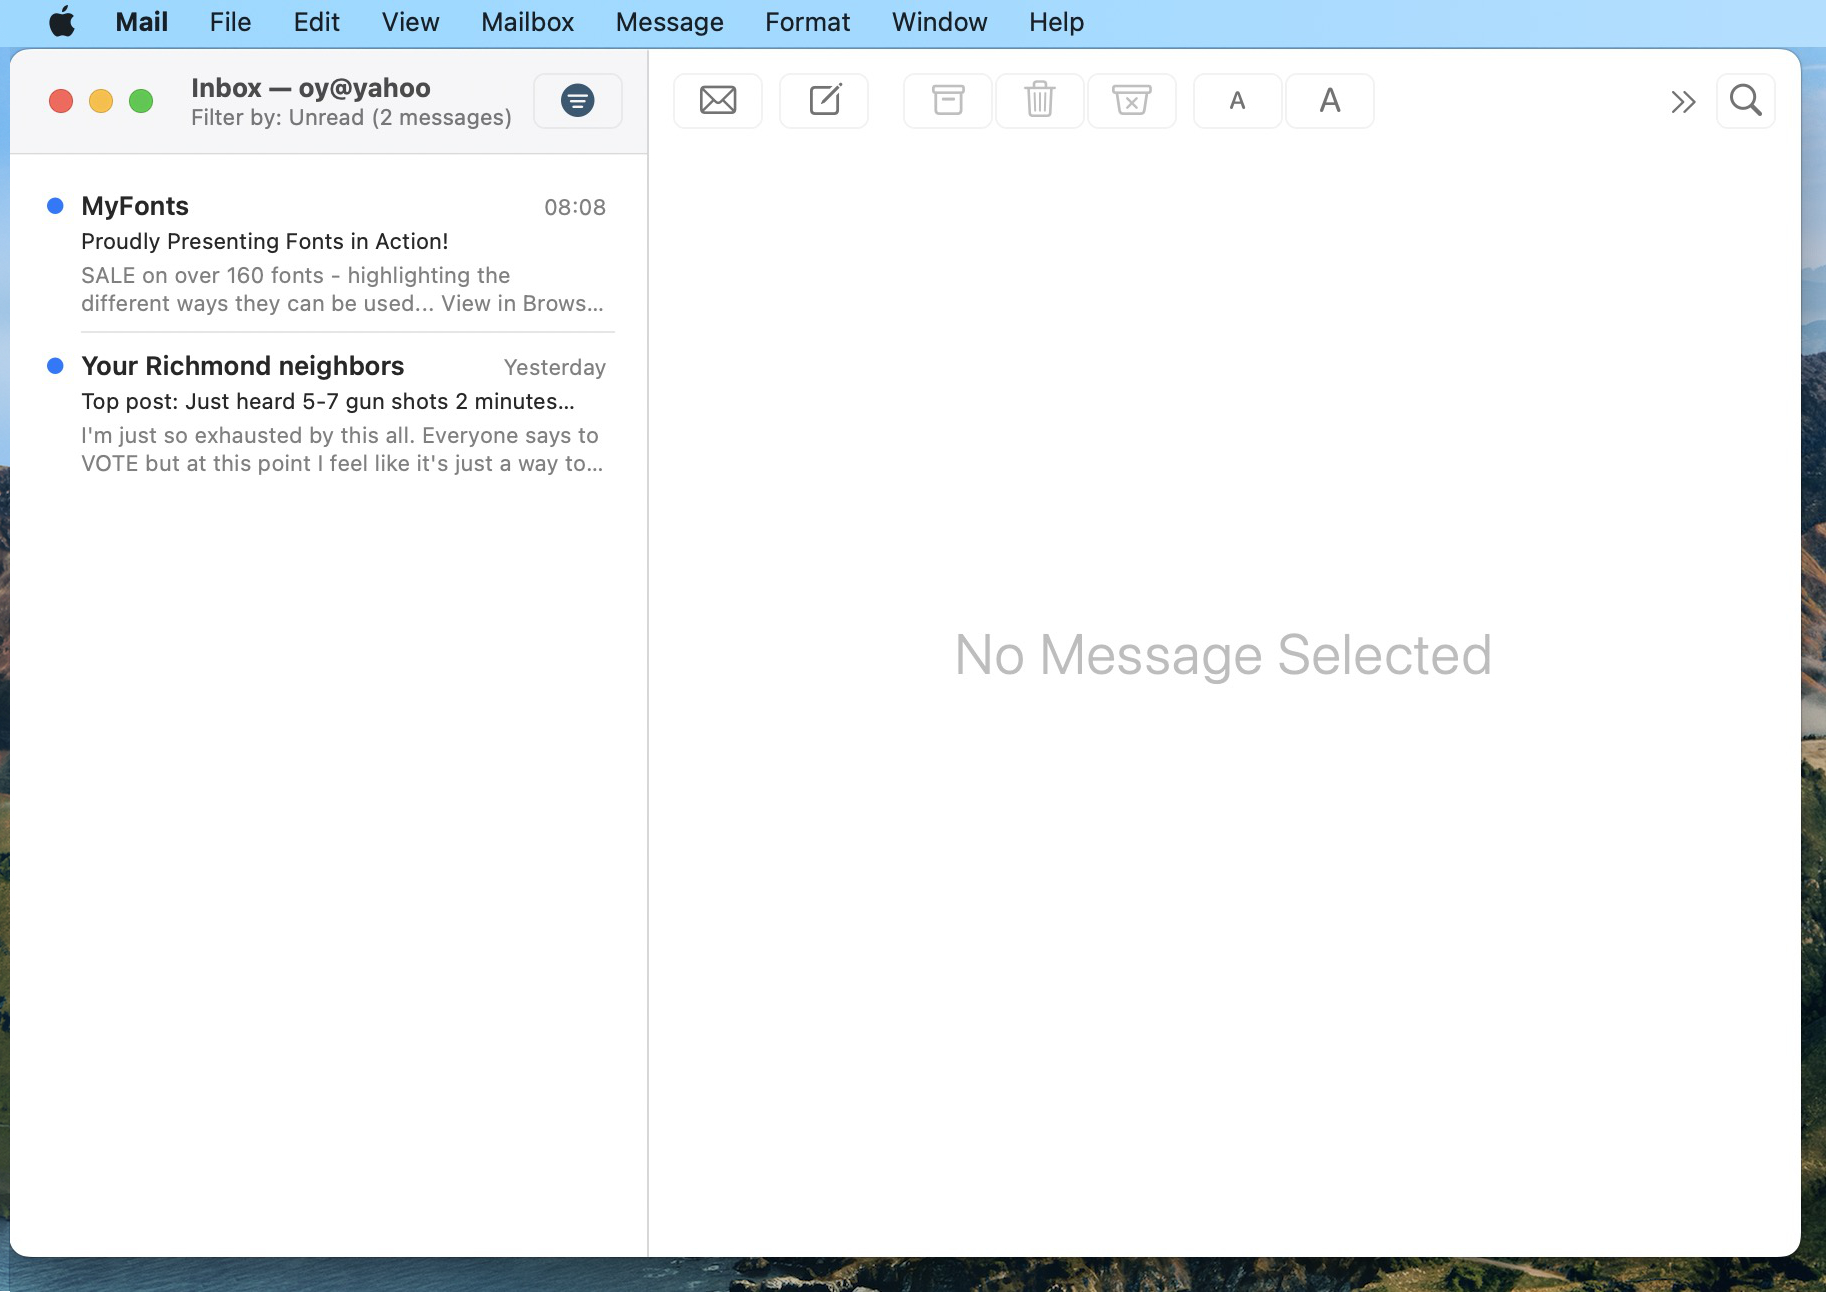 A screenshot of the main Mac OS X mail window